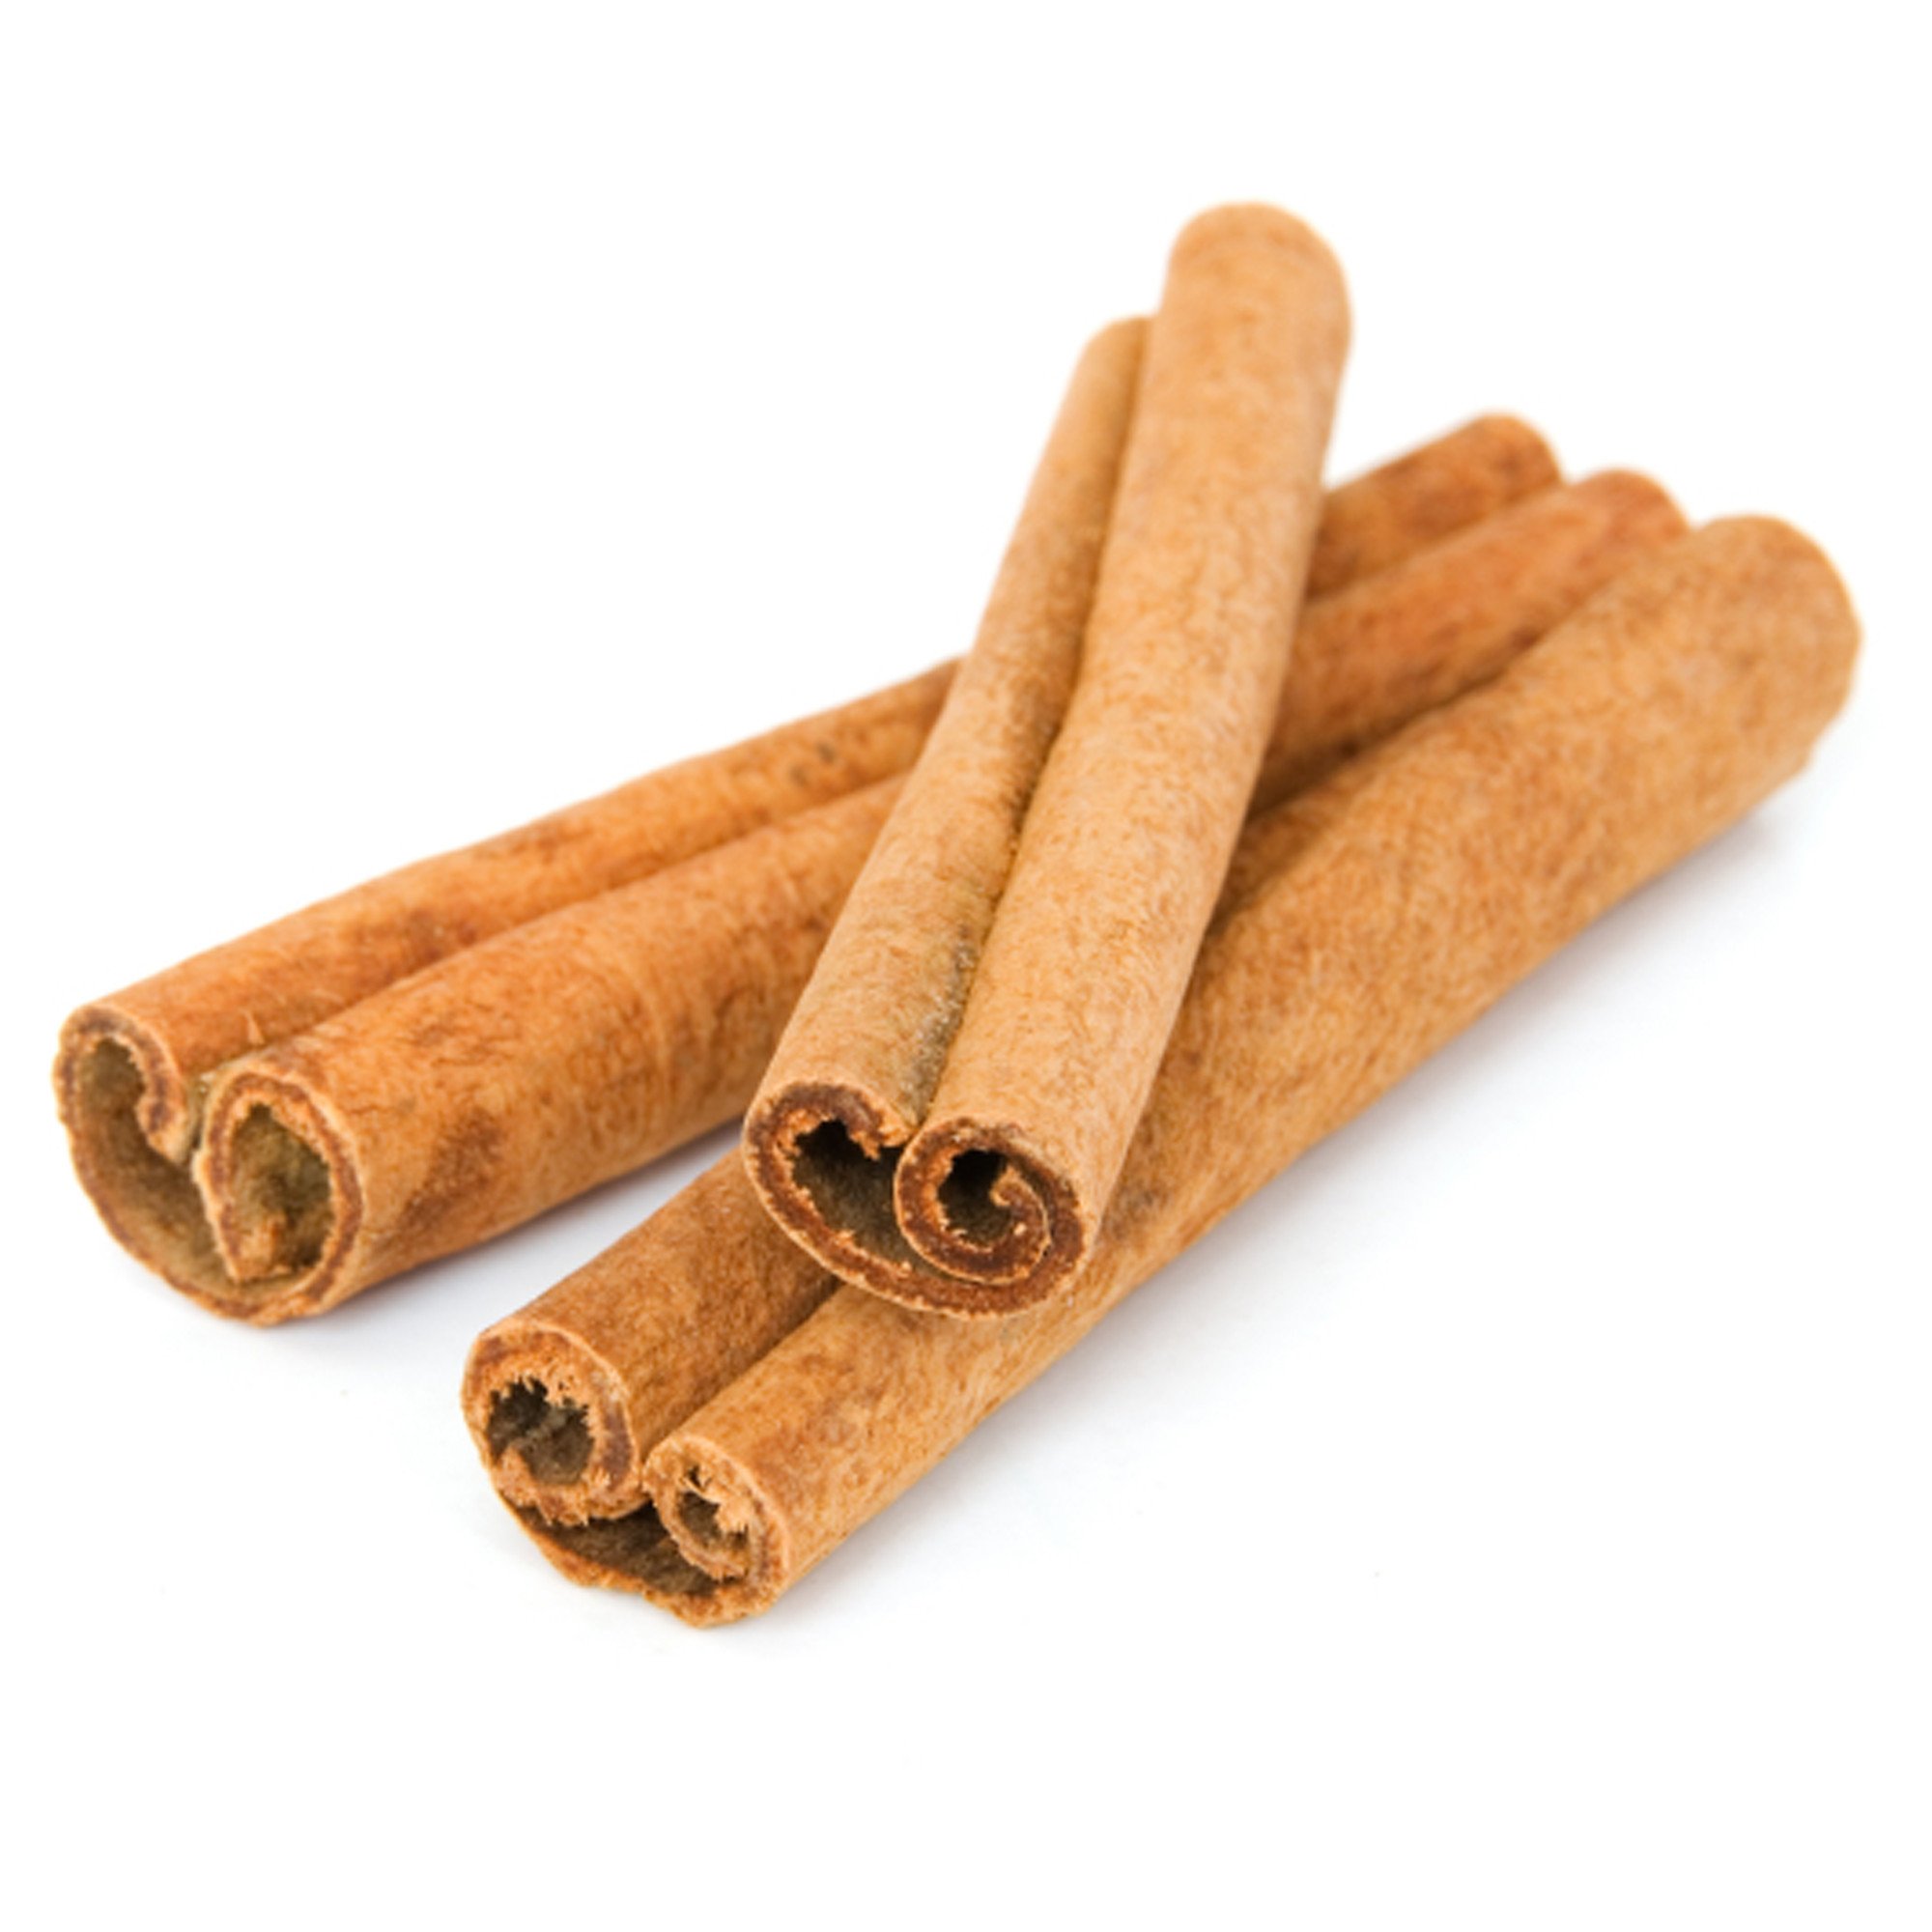 Cinnamon Sticks: great cinnamon flavor | Starlight Herb & Spice Company